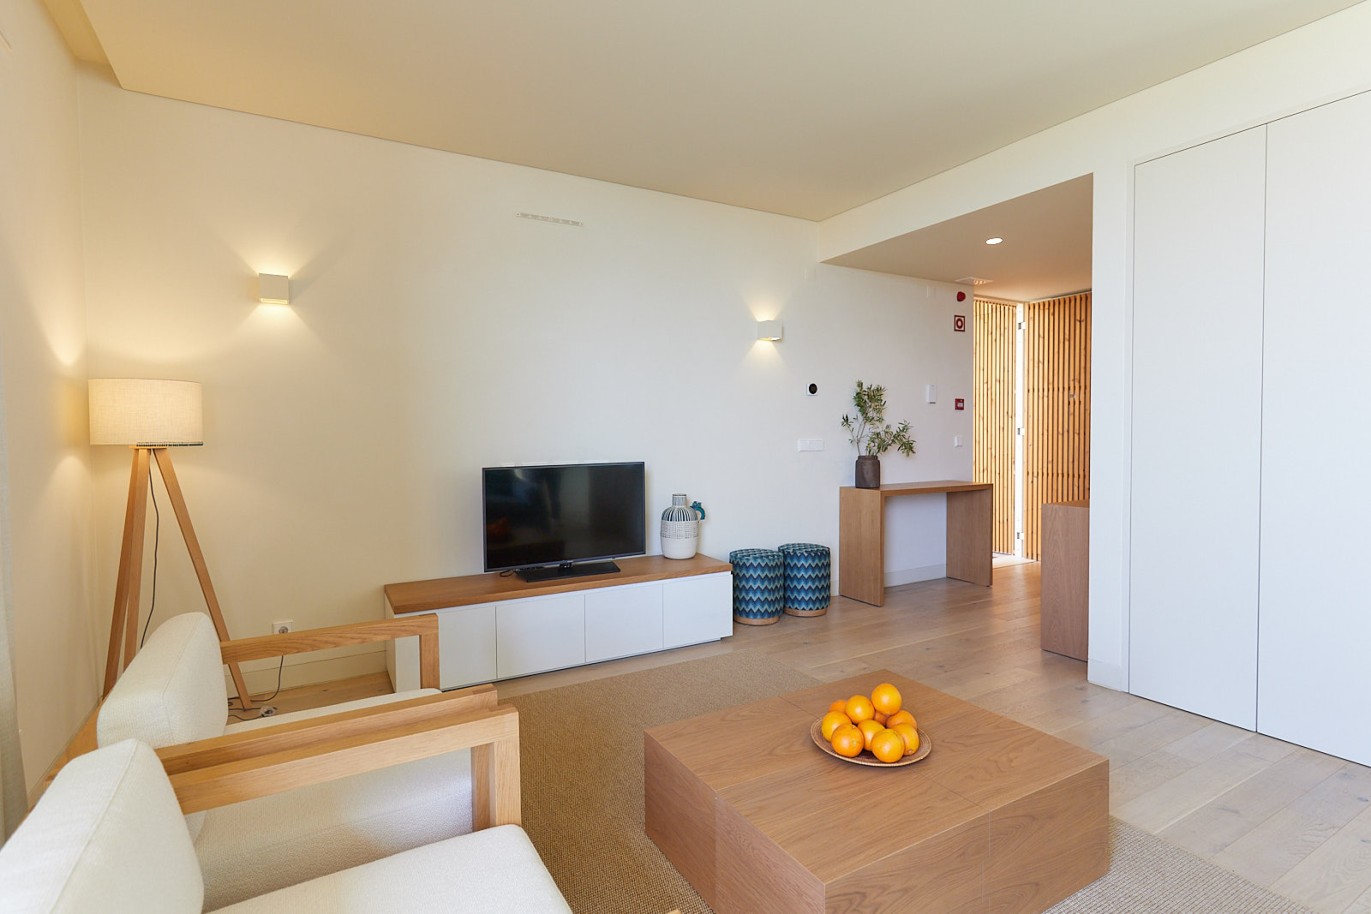 2 bedroom apartment in resort, for sale in Porches, Algarve_230554